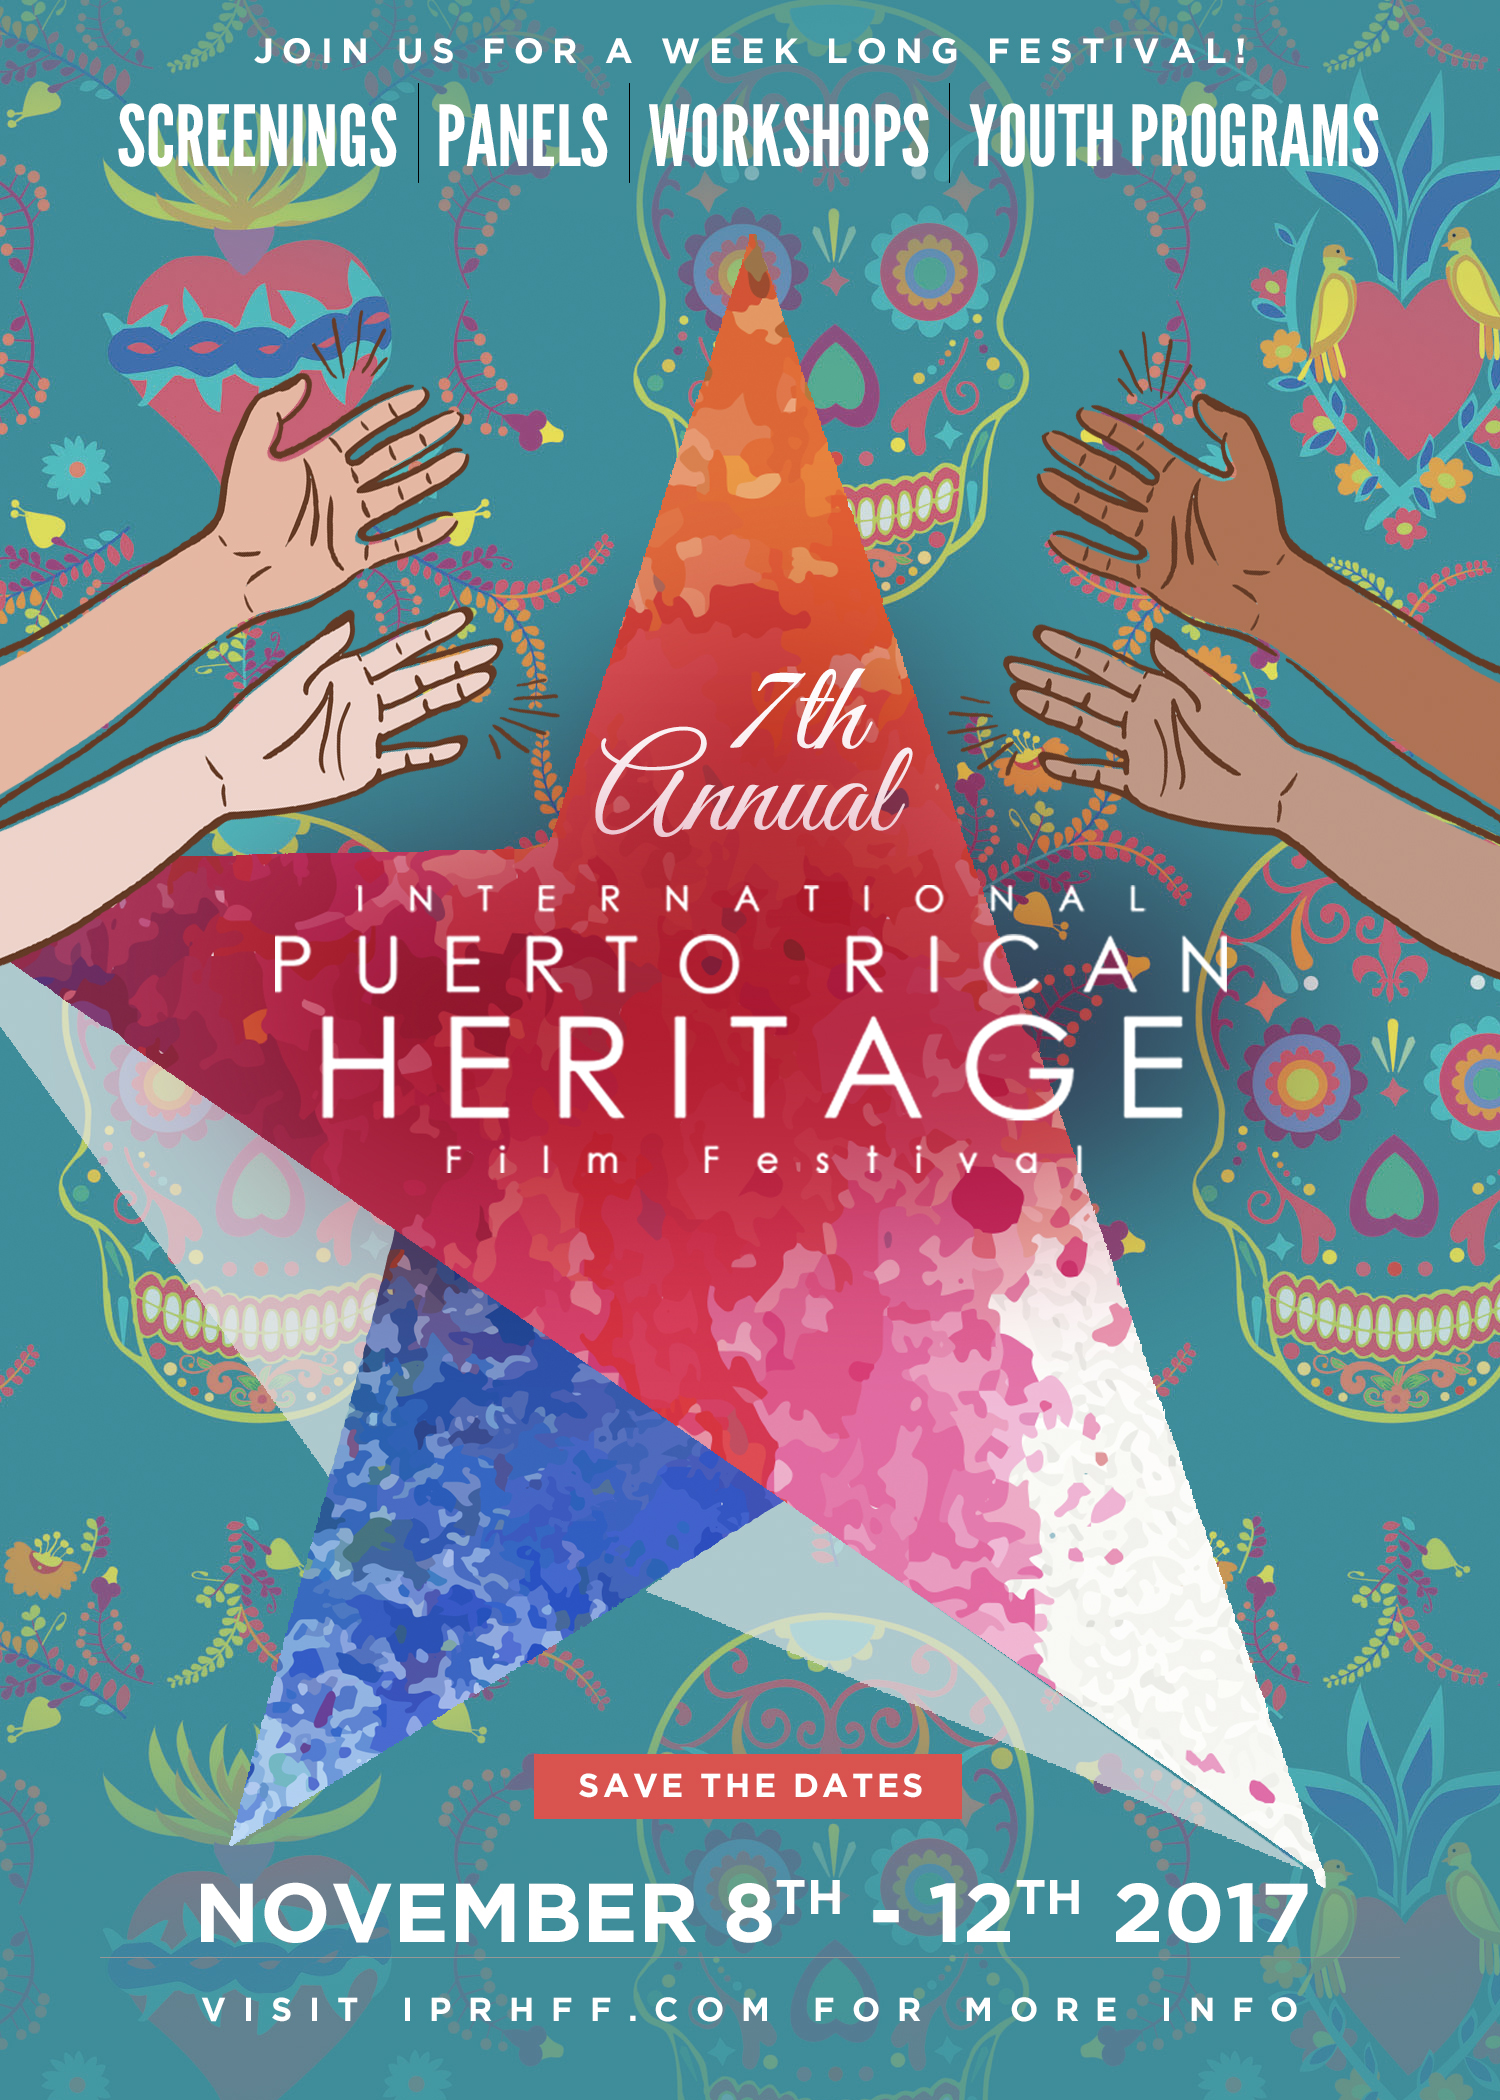 Teatro SEA Shorts Screening and talk back series - 7th Annual International Puerto Rican Heritage Film Festival